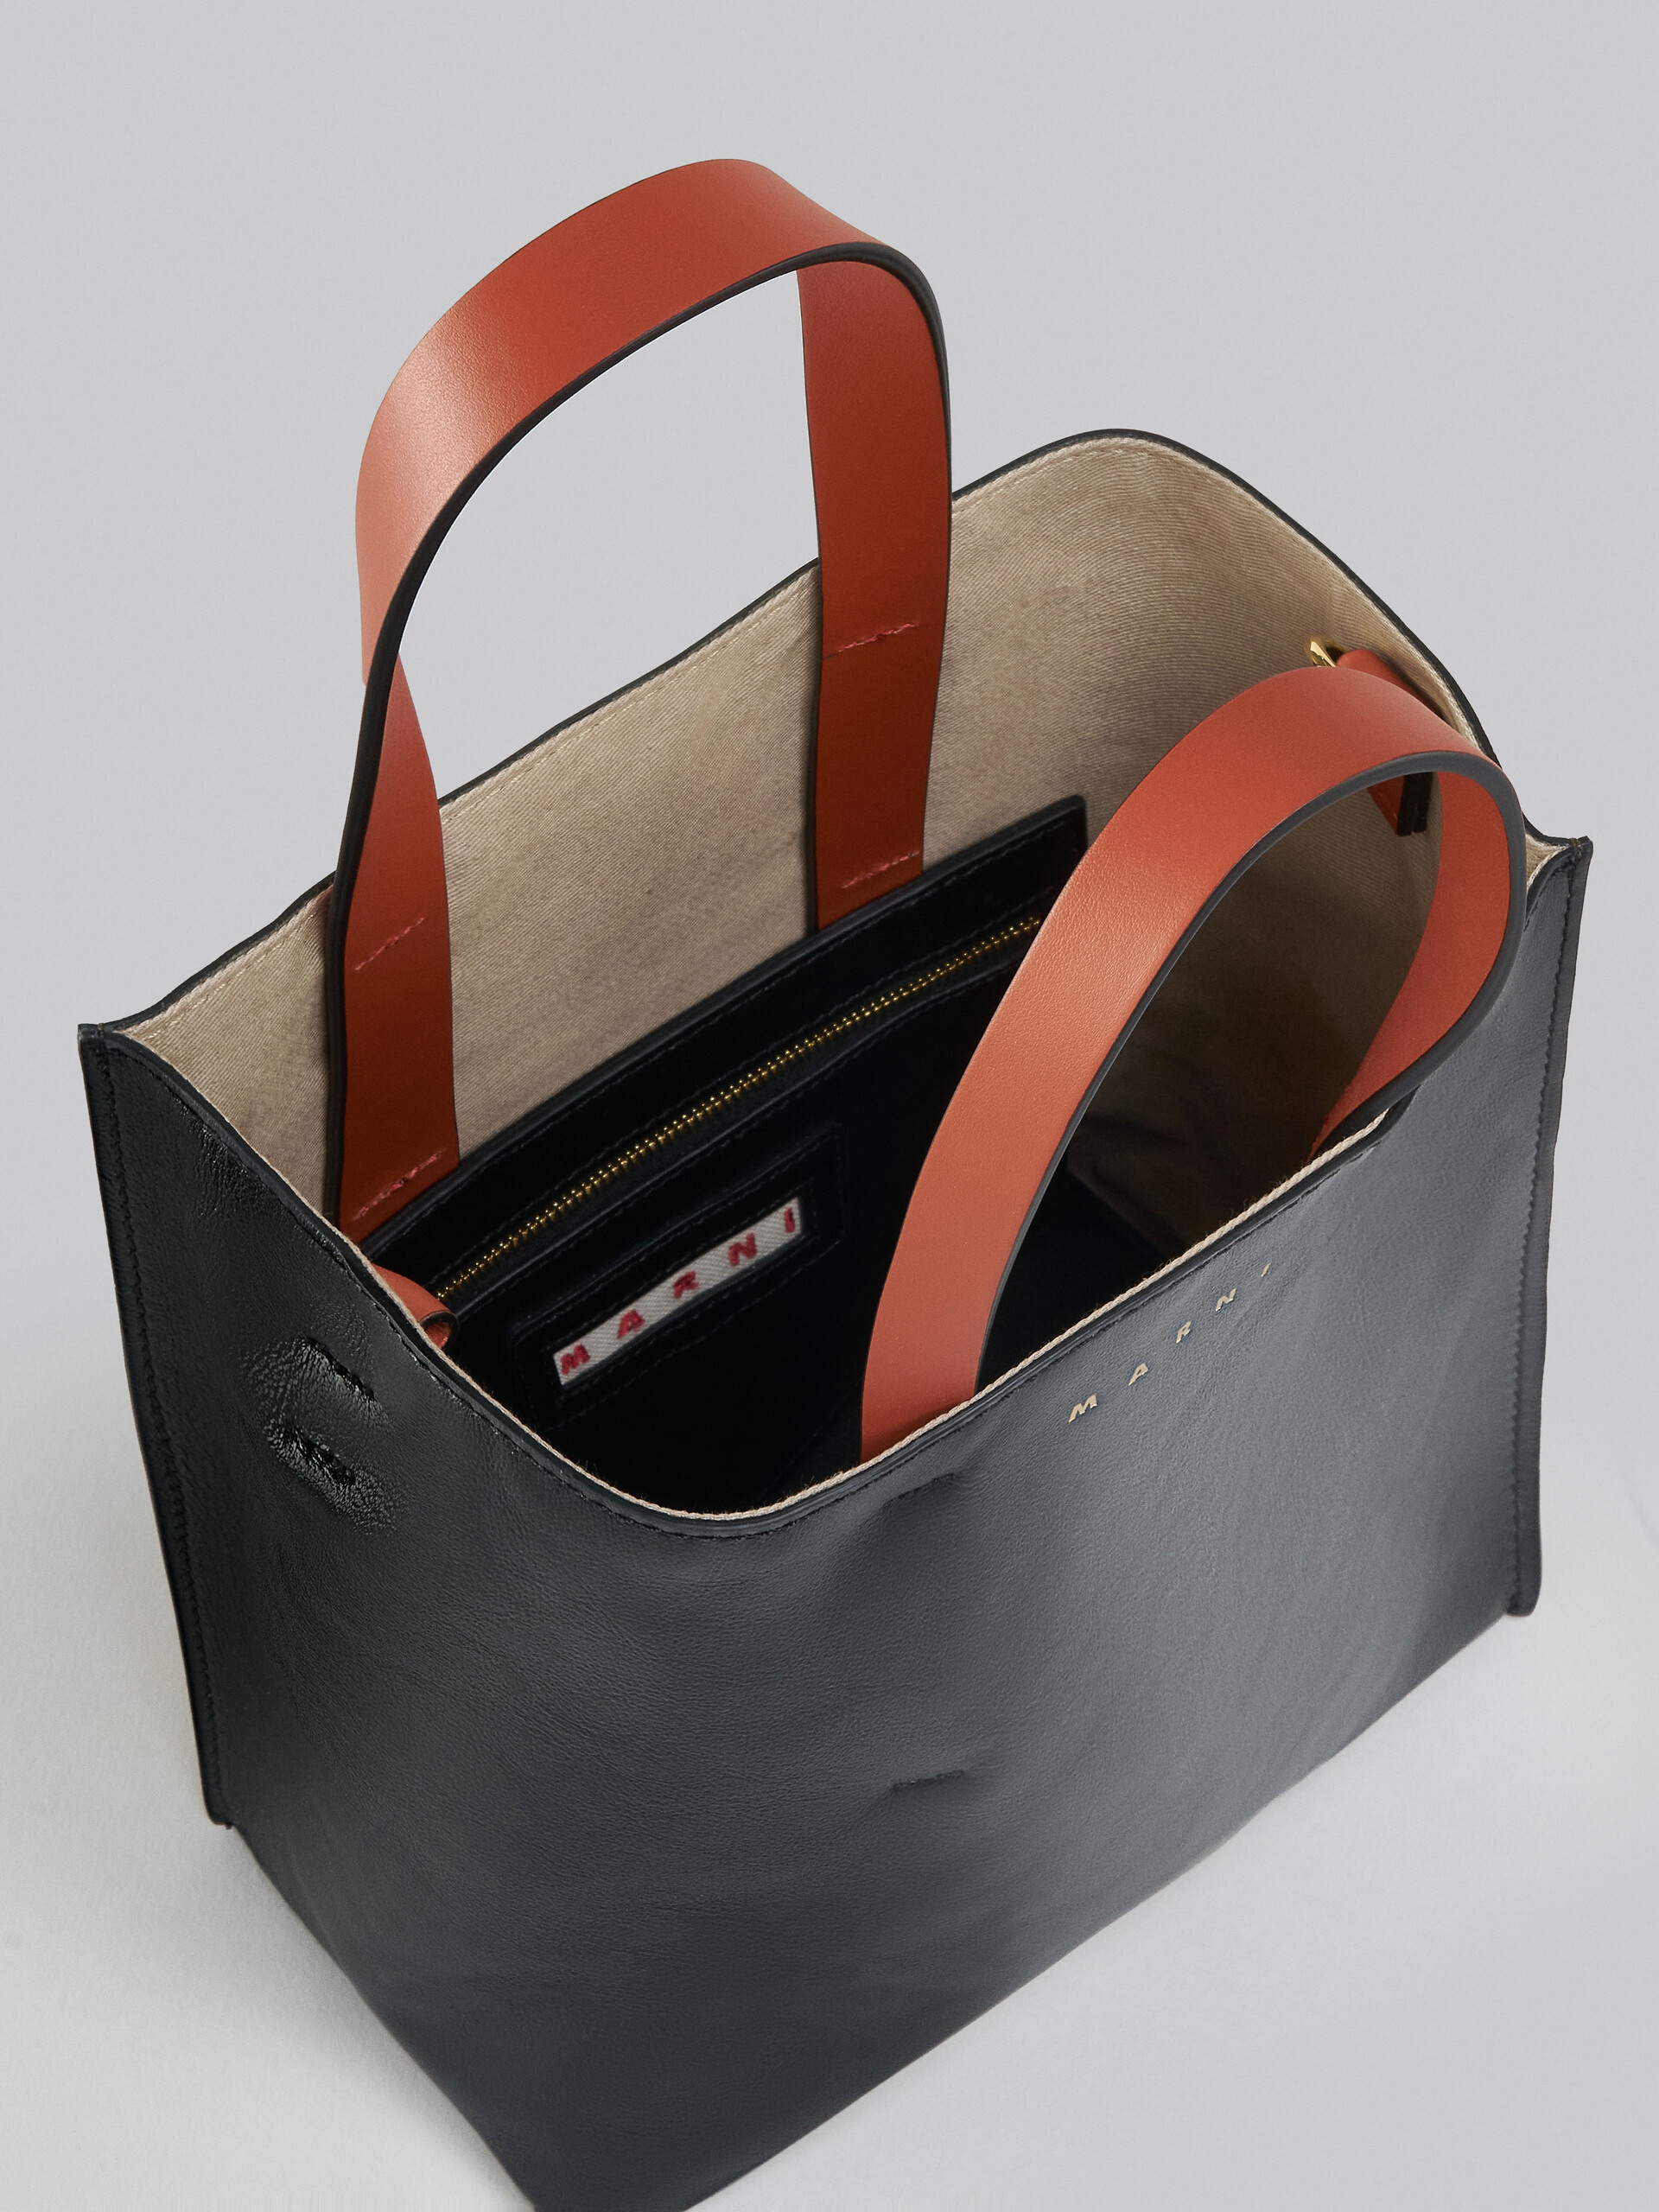 Museo Soft Bag Mini in pelle grigia nera e bordeaux - Borse shopping - Image 4